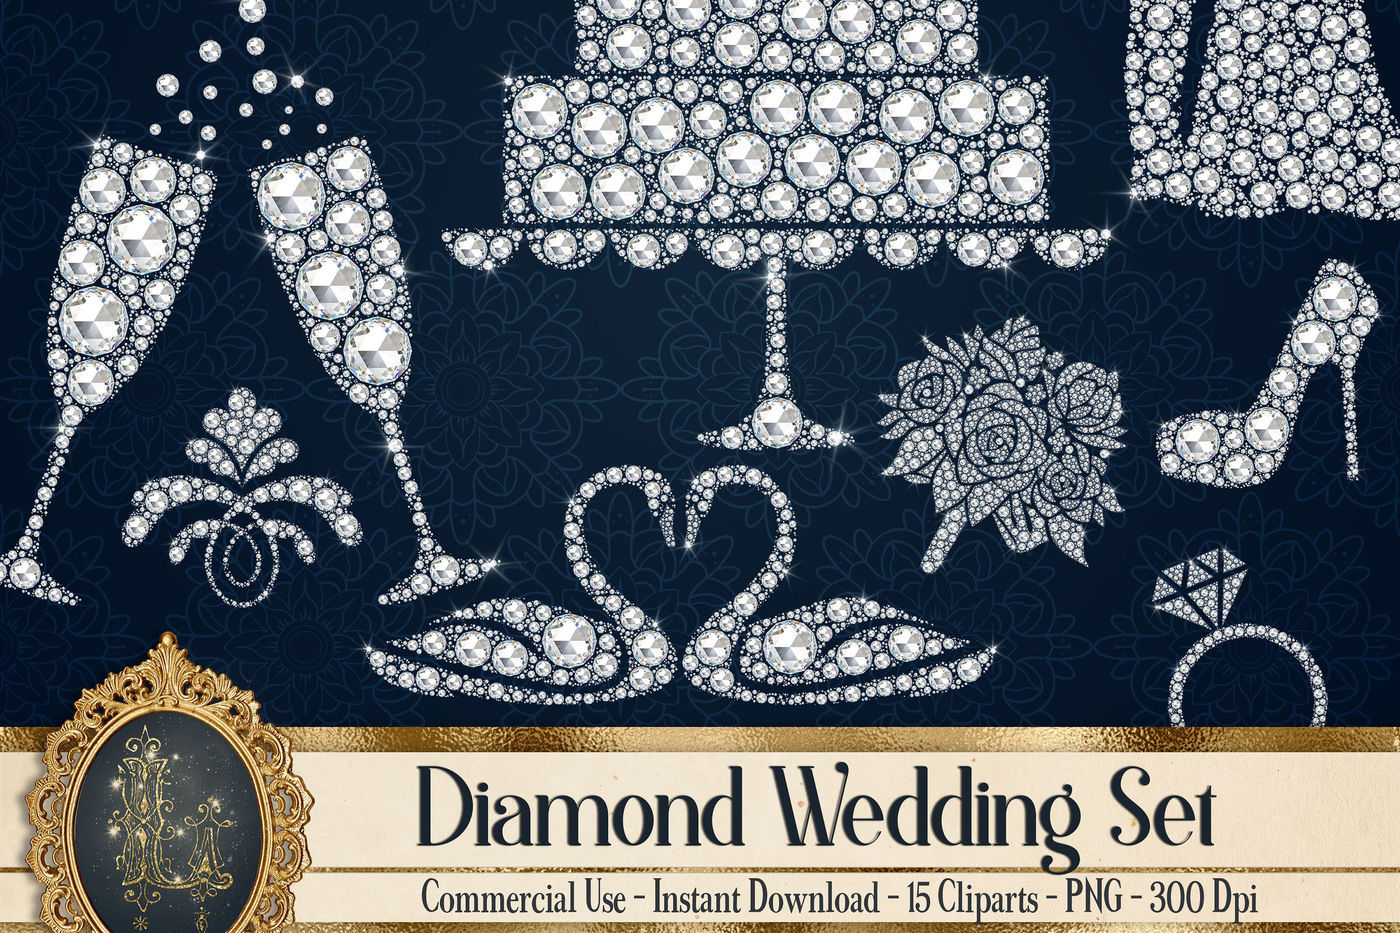 15 Diamond Wedding Clip Arts Champagne Glass Swan Bouquet Bridal By Artinsider Thehungryjpeg Com